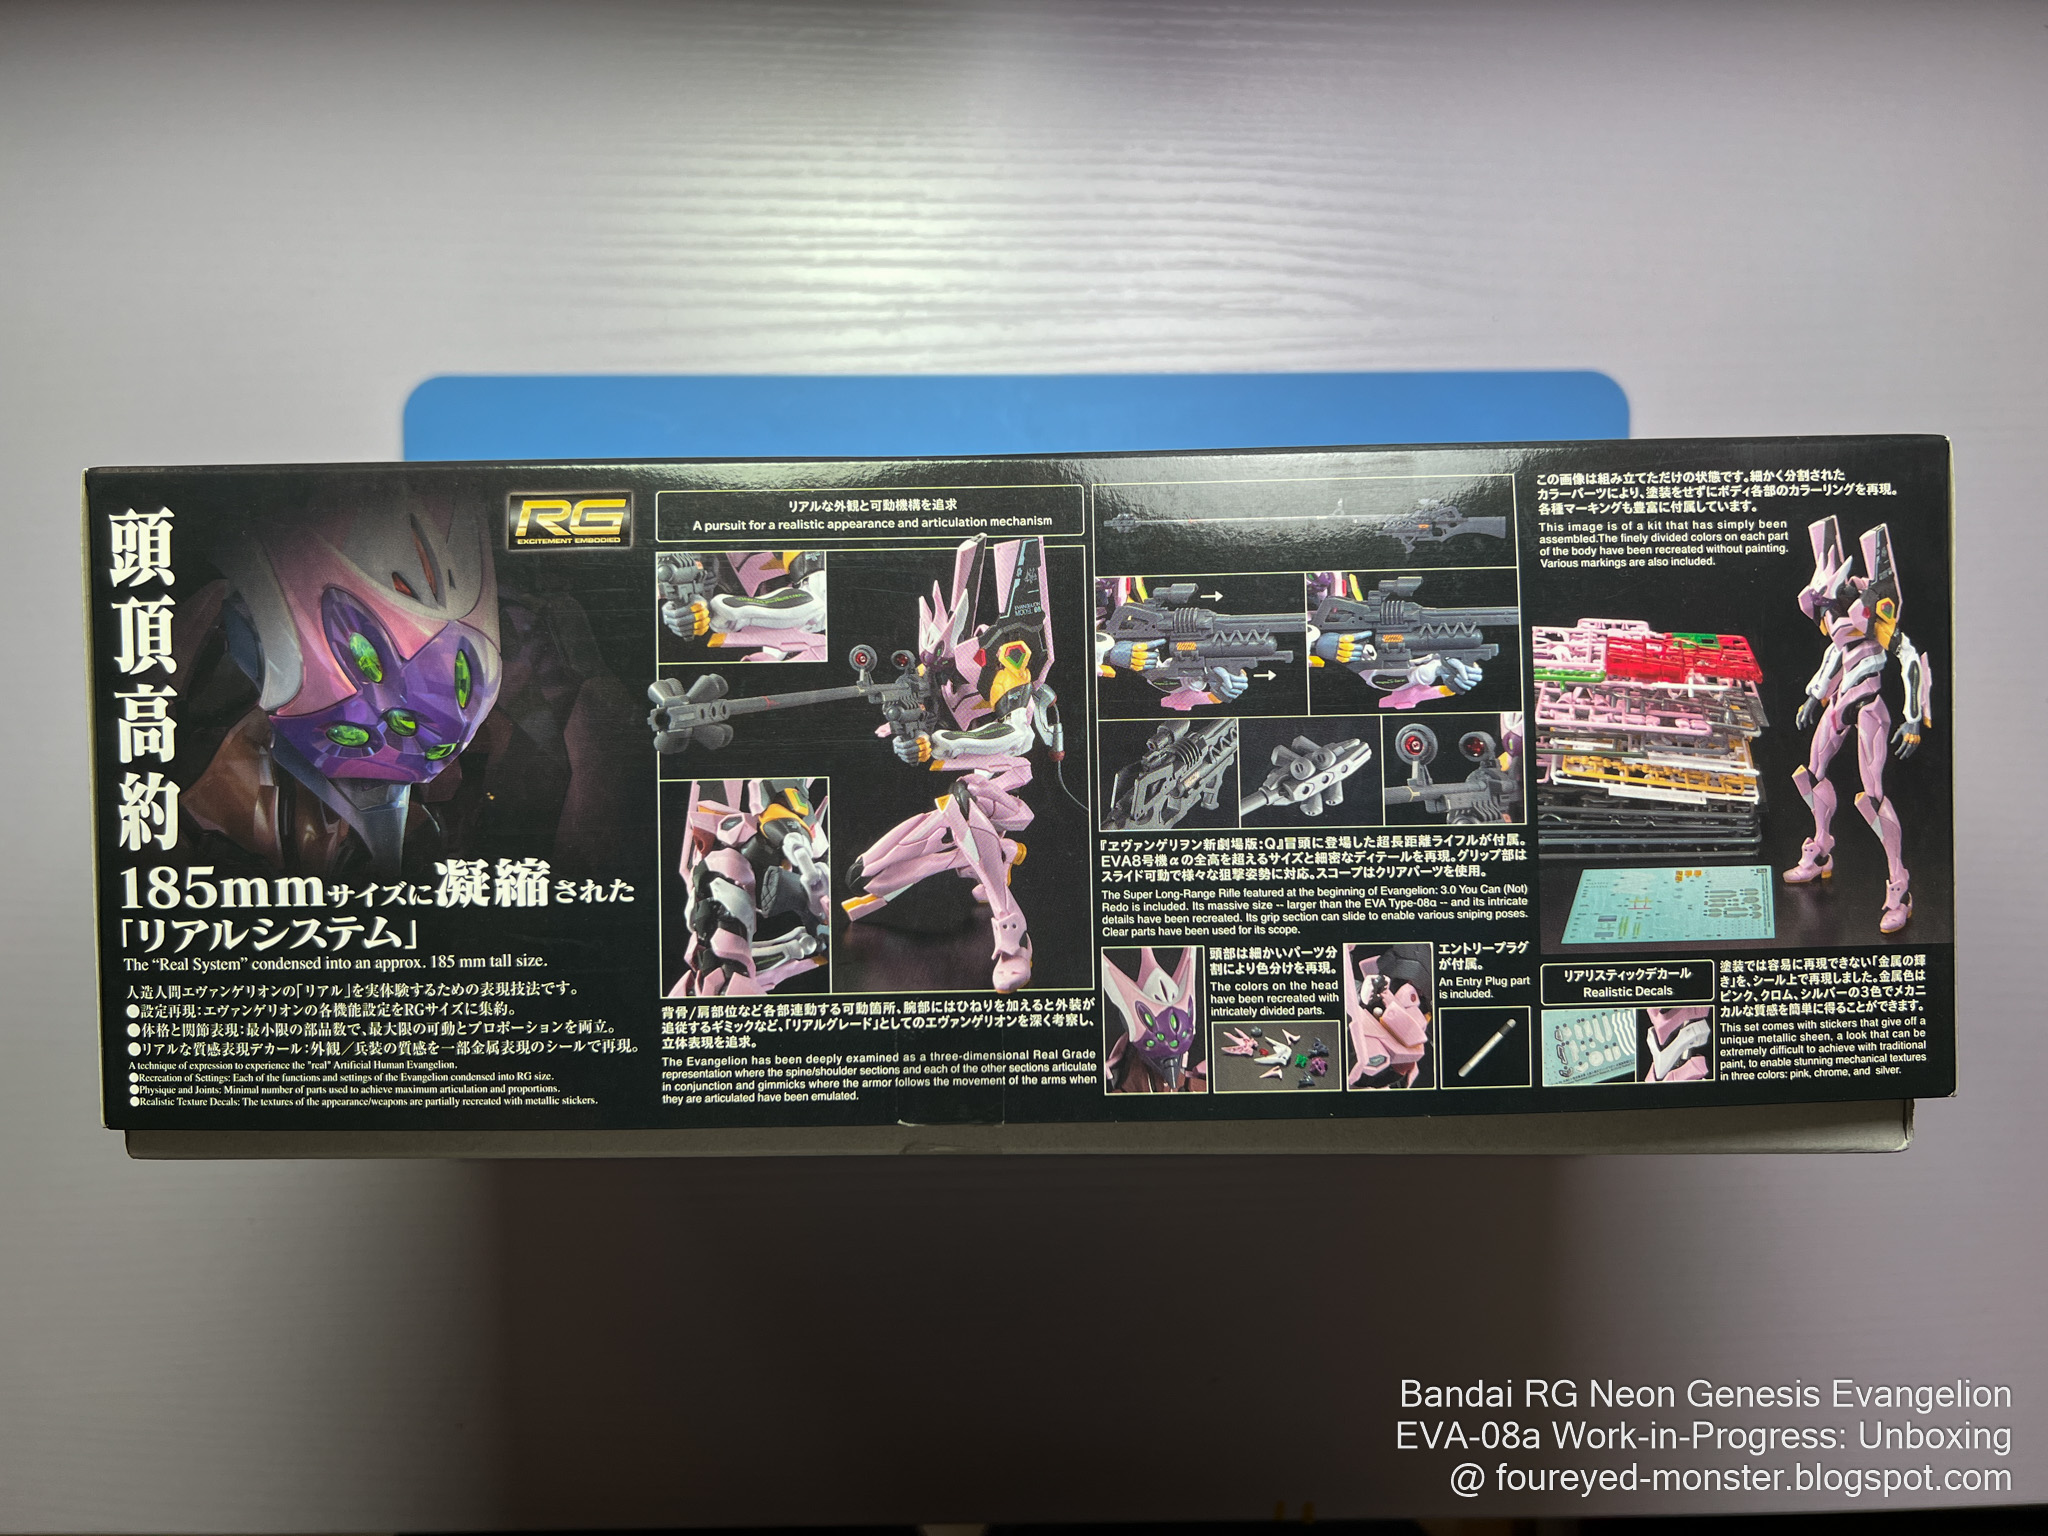 EVA Unit-04 Real Grade Model Kit | Rebuild of Evangelion | Bandai Spirits